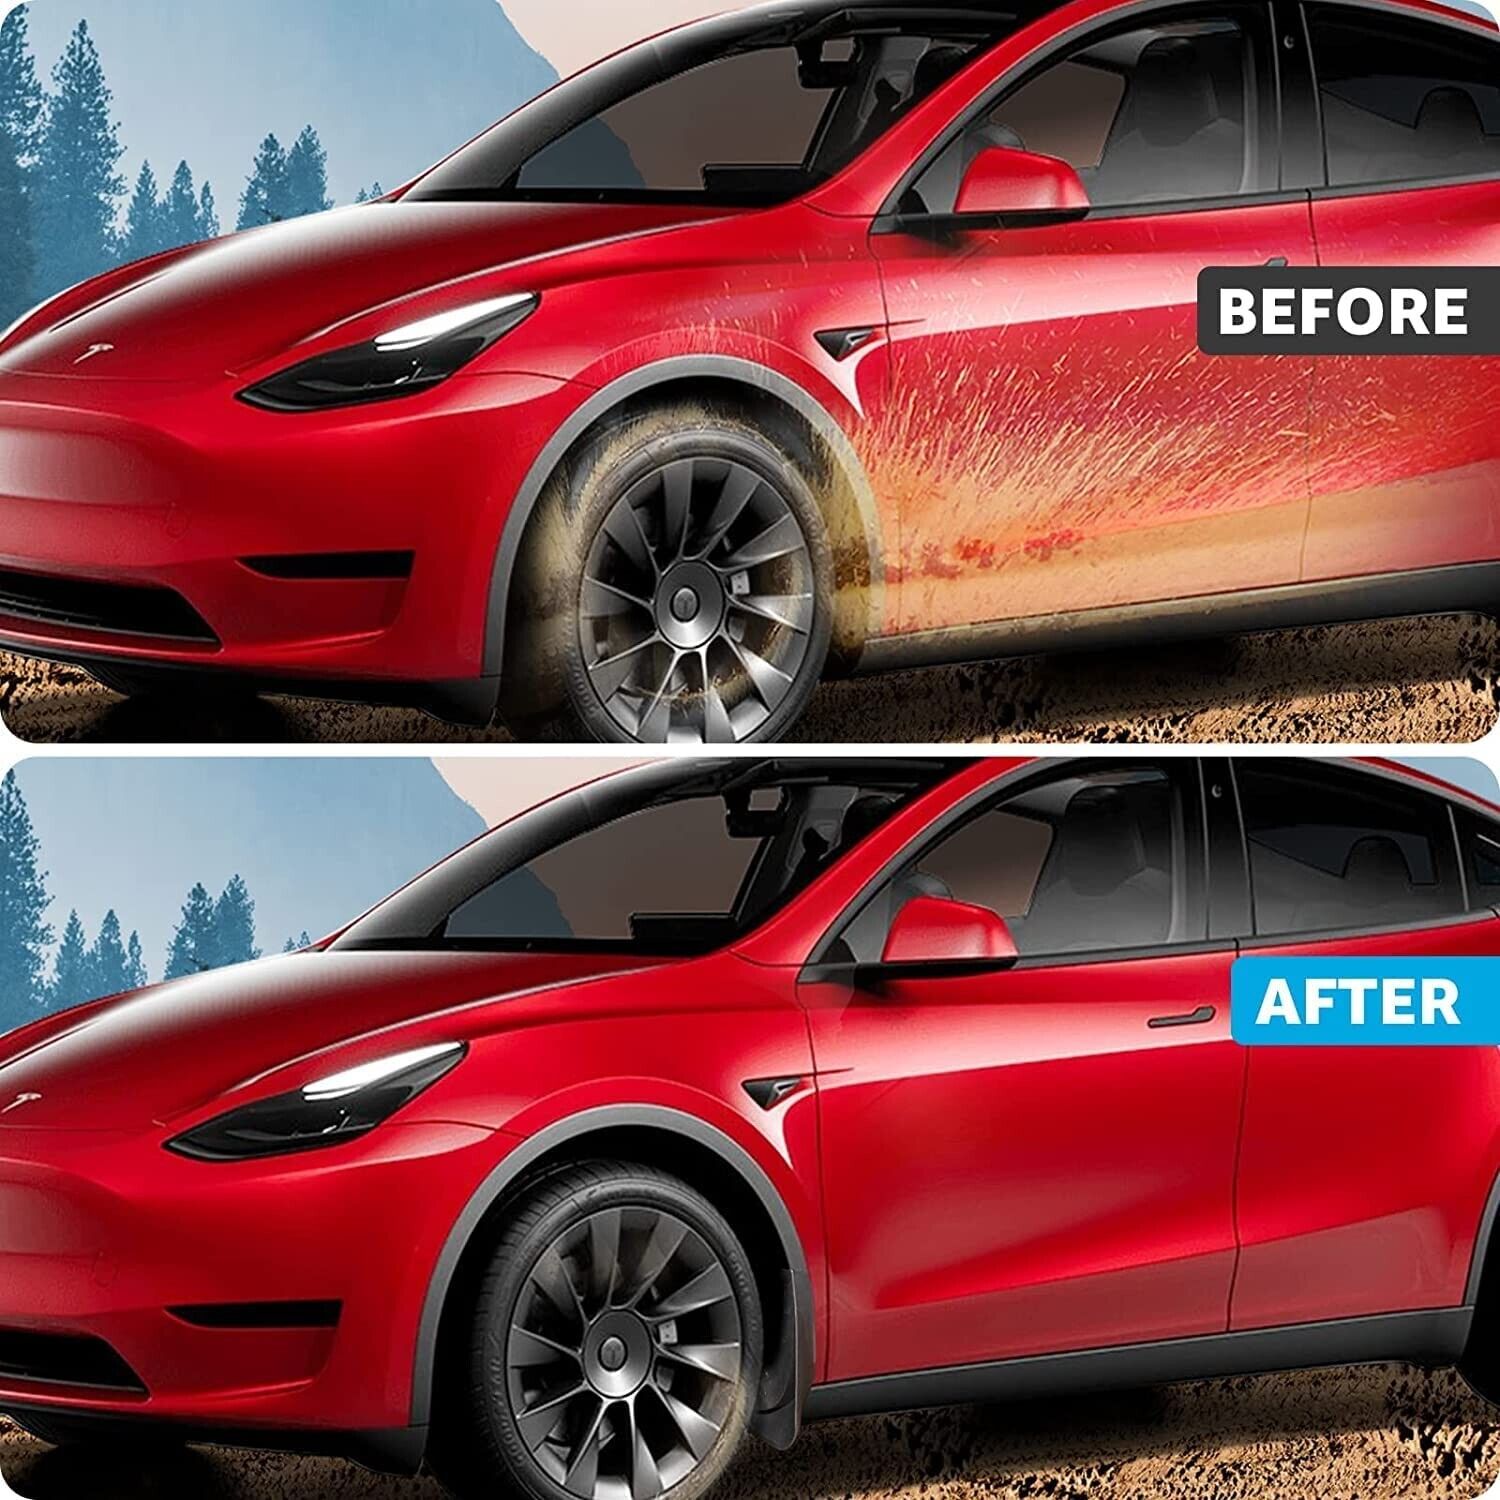 Model Y Tesla Mud Flaps Splash Guards Winter Vehicle Protection No Holes 4  Pcs